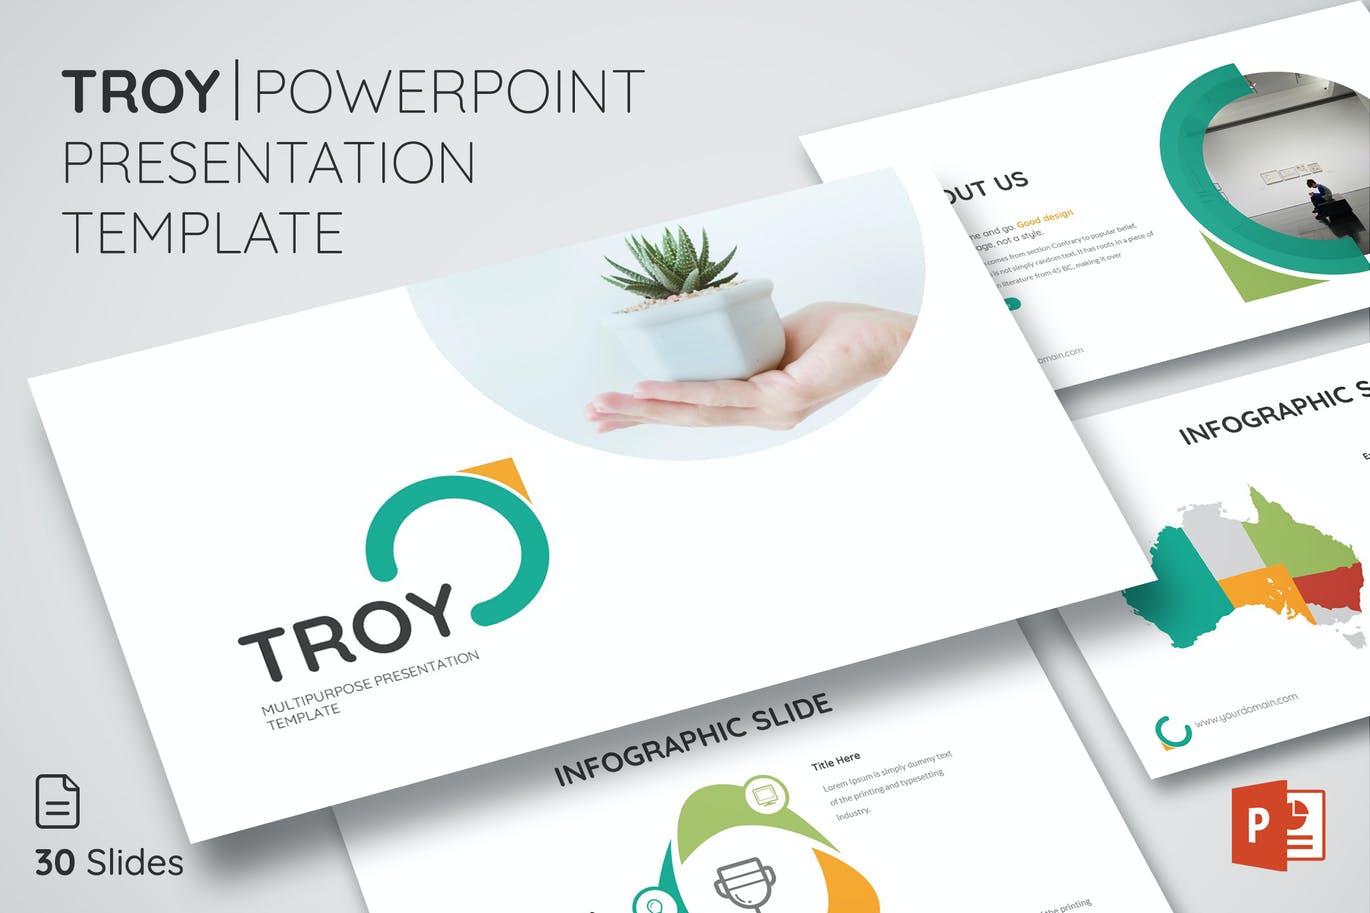 Troy – Powerpoint Presentation Template (PPTX)